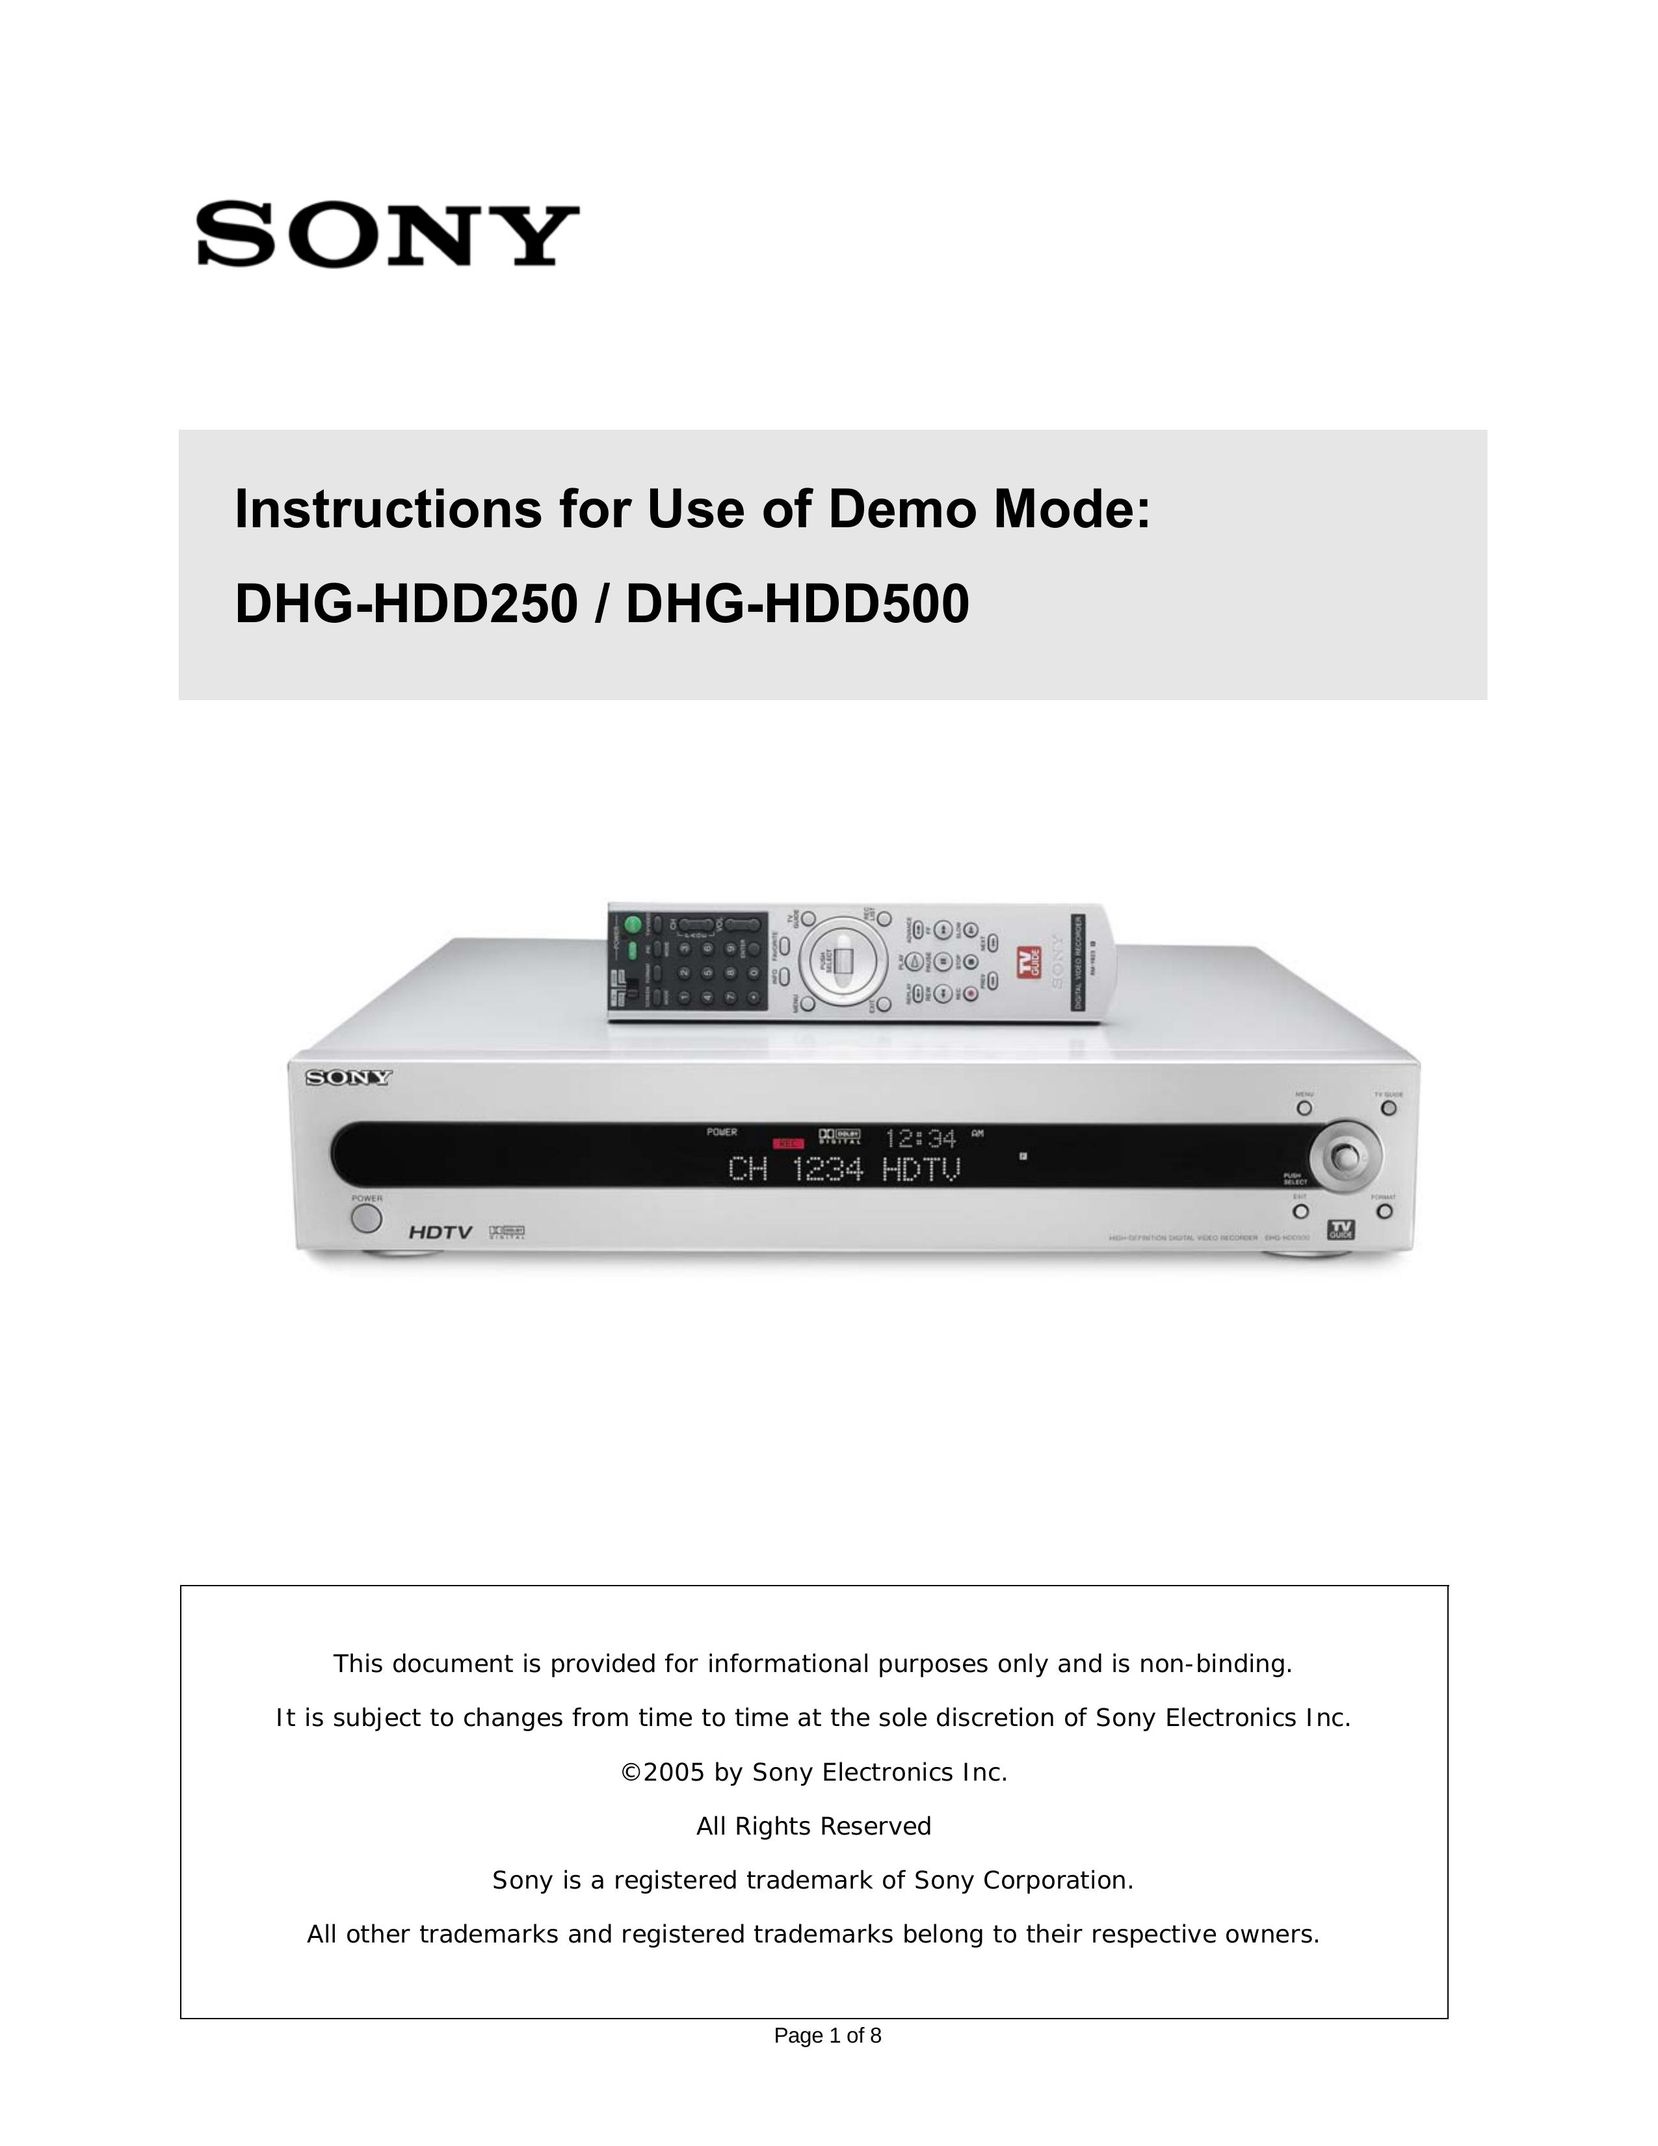 Sony DHG-HDD500 Blender User Manual